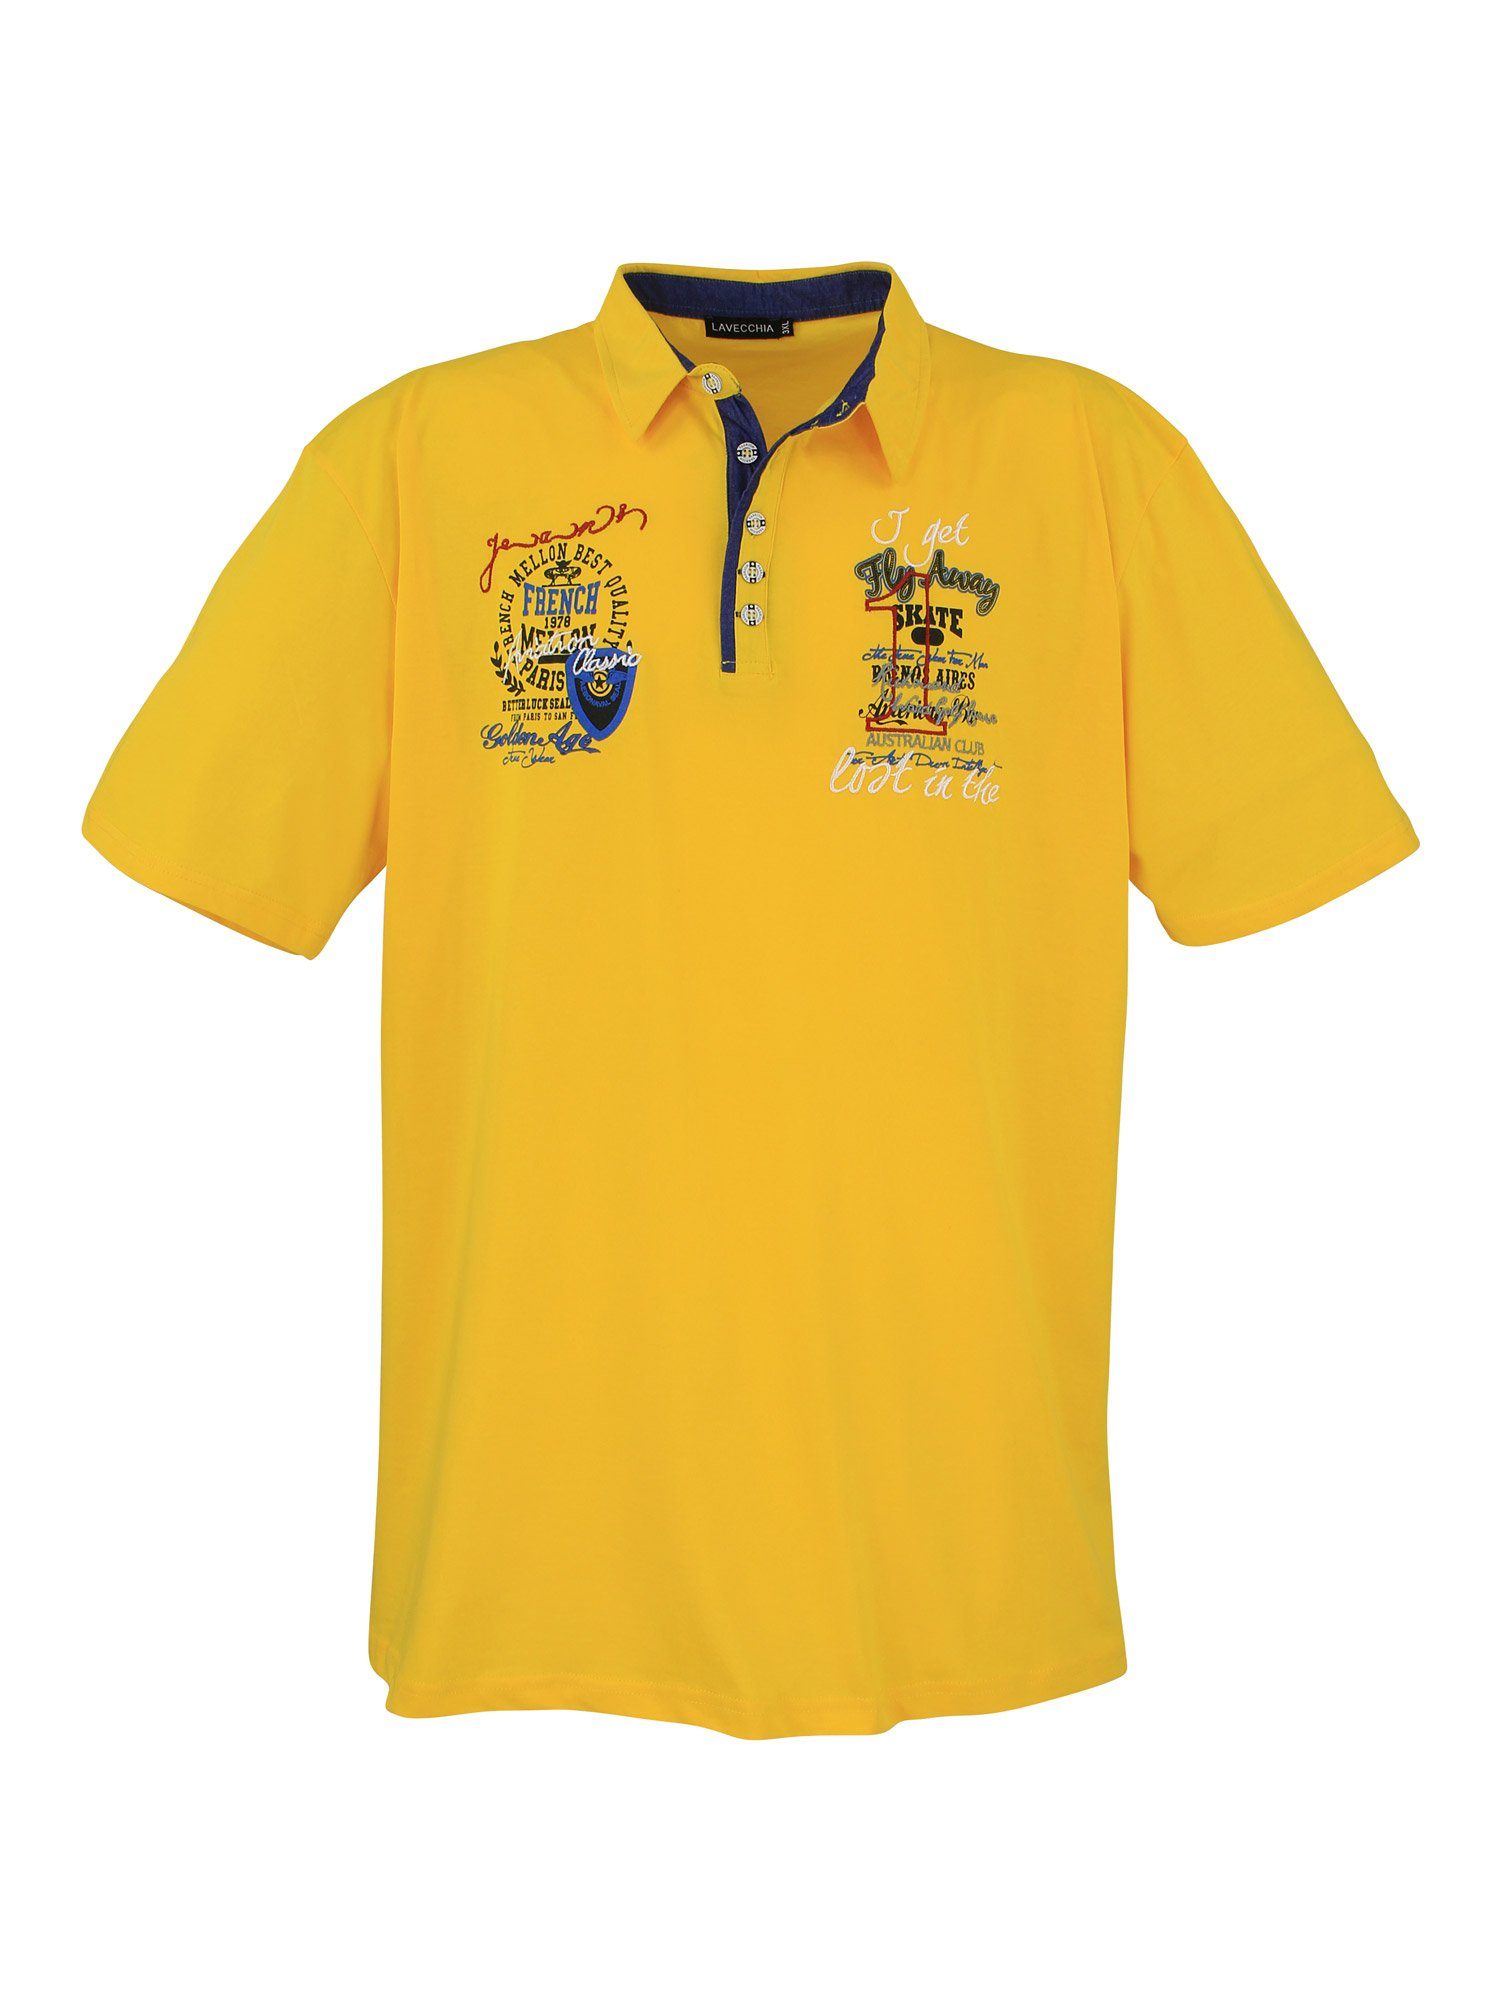 Herren gelb LV-3101 Polo Herren Shirt Lavecchia Poloshirt Shirt Übergrößen Polo